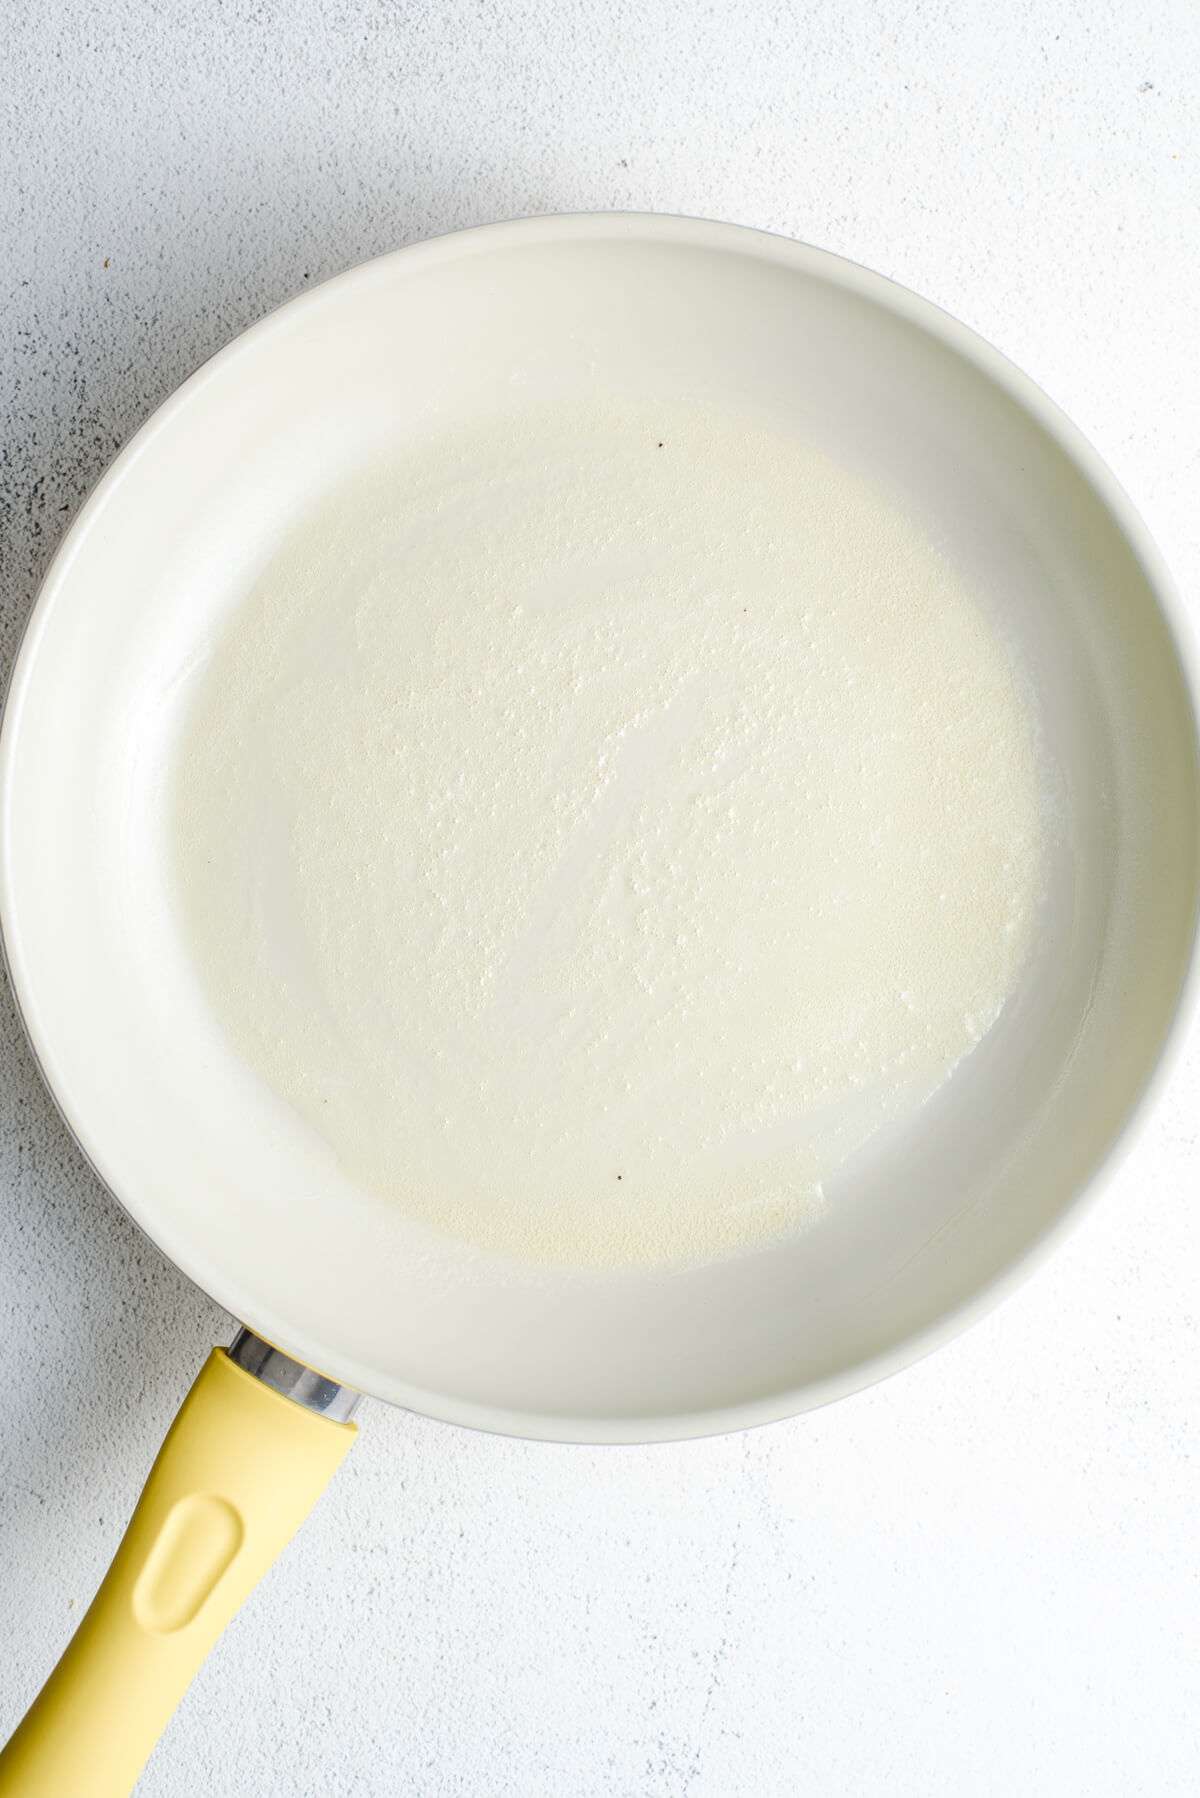 butter foaming on hot pan